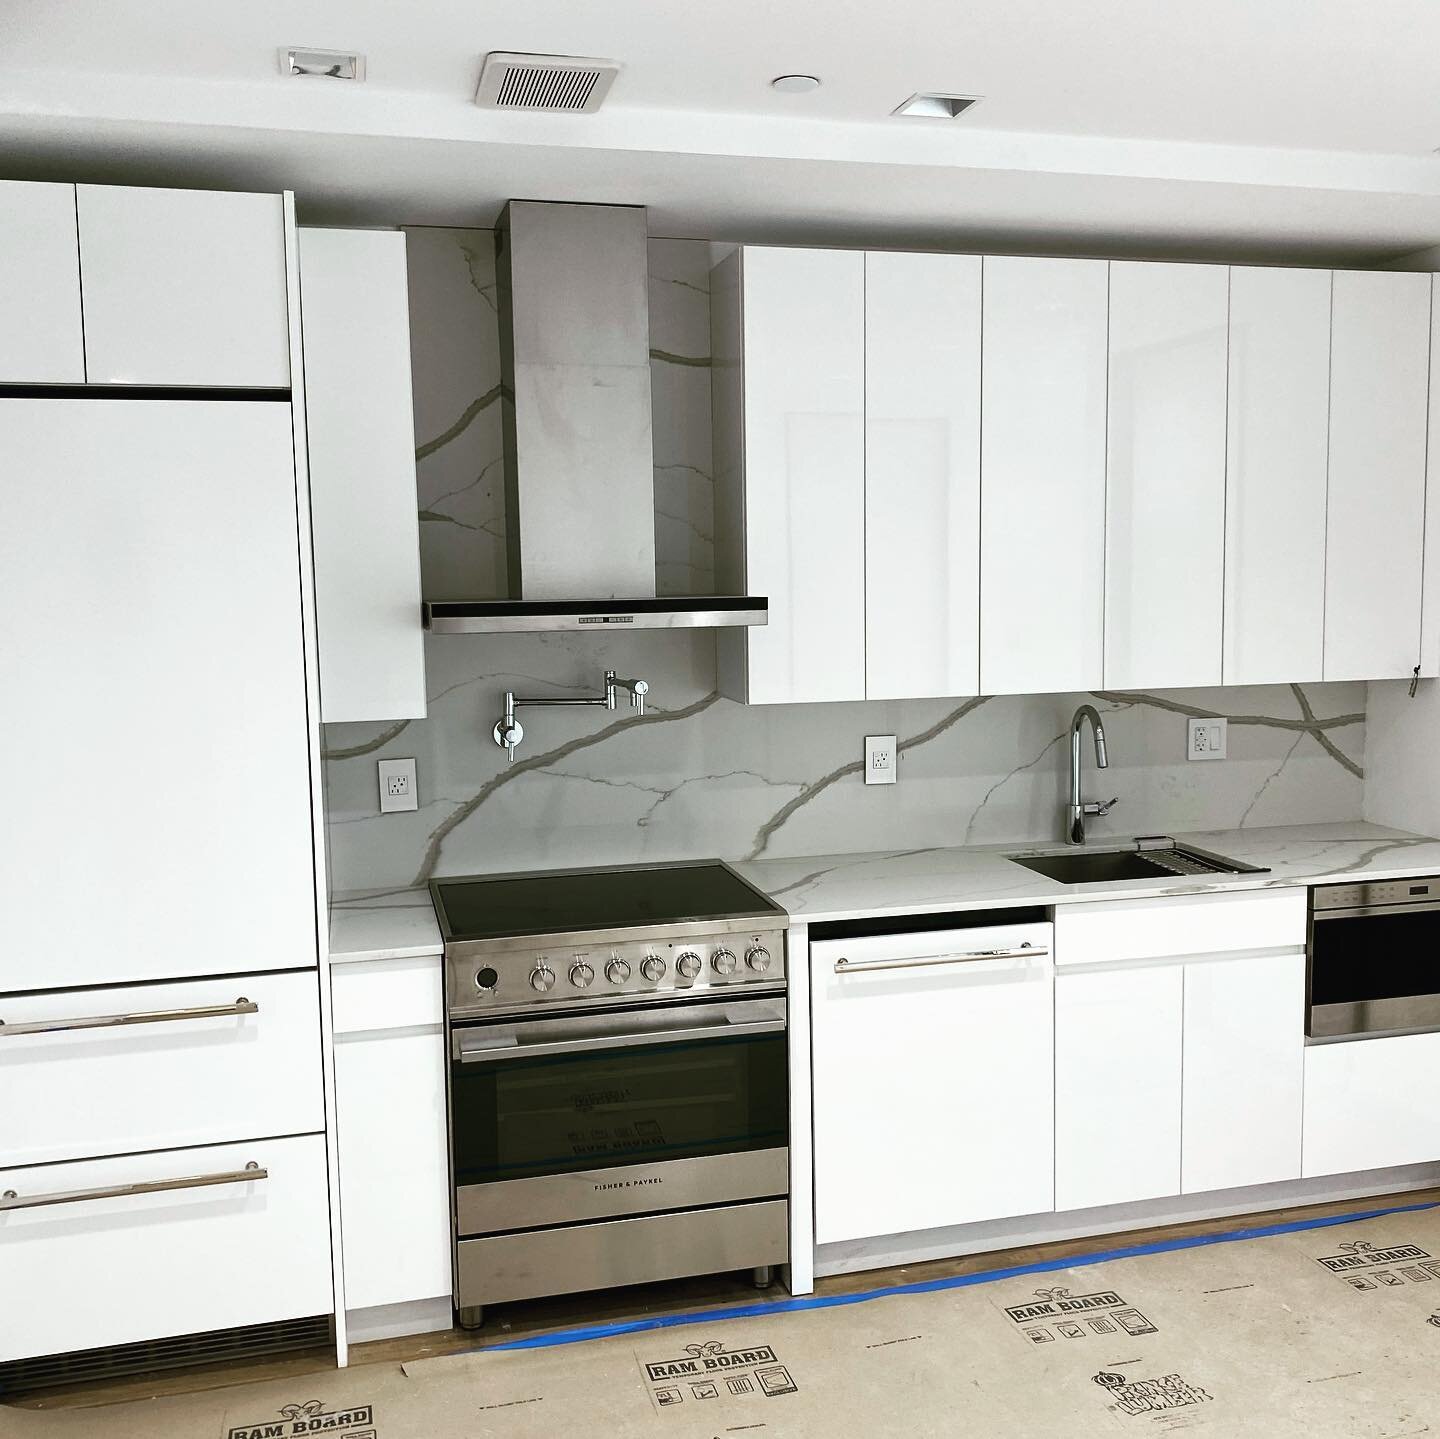 Fresh, new kitchen - because you deserve it... #techcrew #techcrewnyc #generalcontractor #homedecor #homeimprovement #kitchendesign #kitchenremodel #kitchenrenovation #kitchen #kitchencabinets #interiordesigndetails #interiordesign #remodel #remodeli